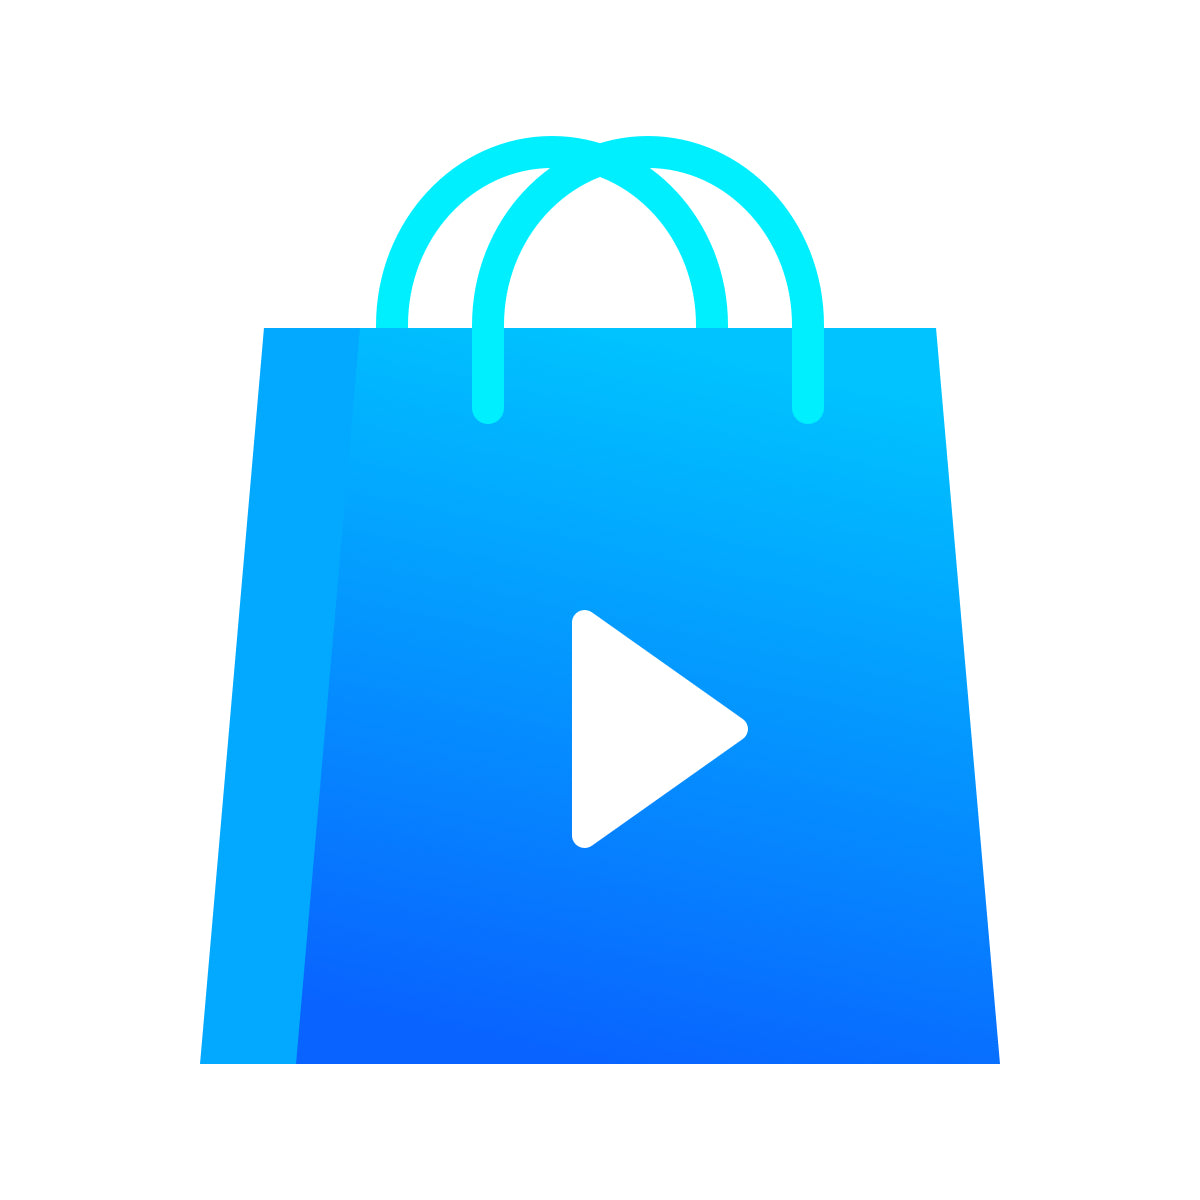 Vimotia ‑ Shoppable Videos